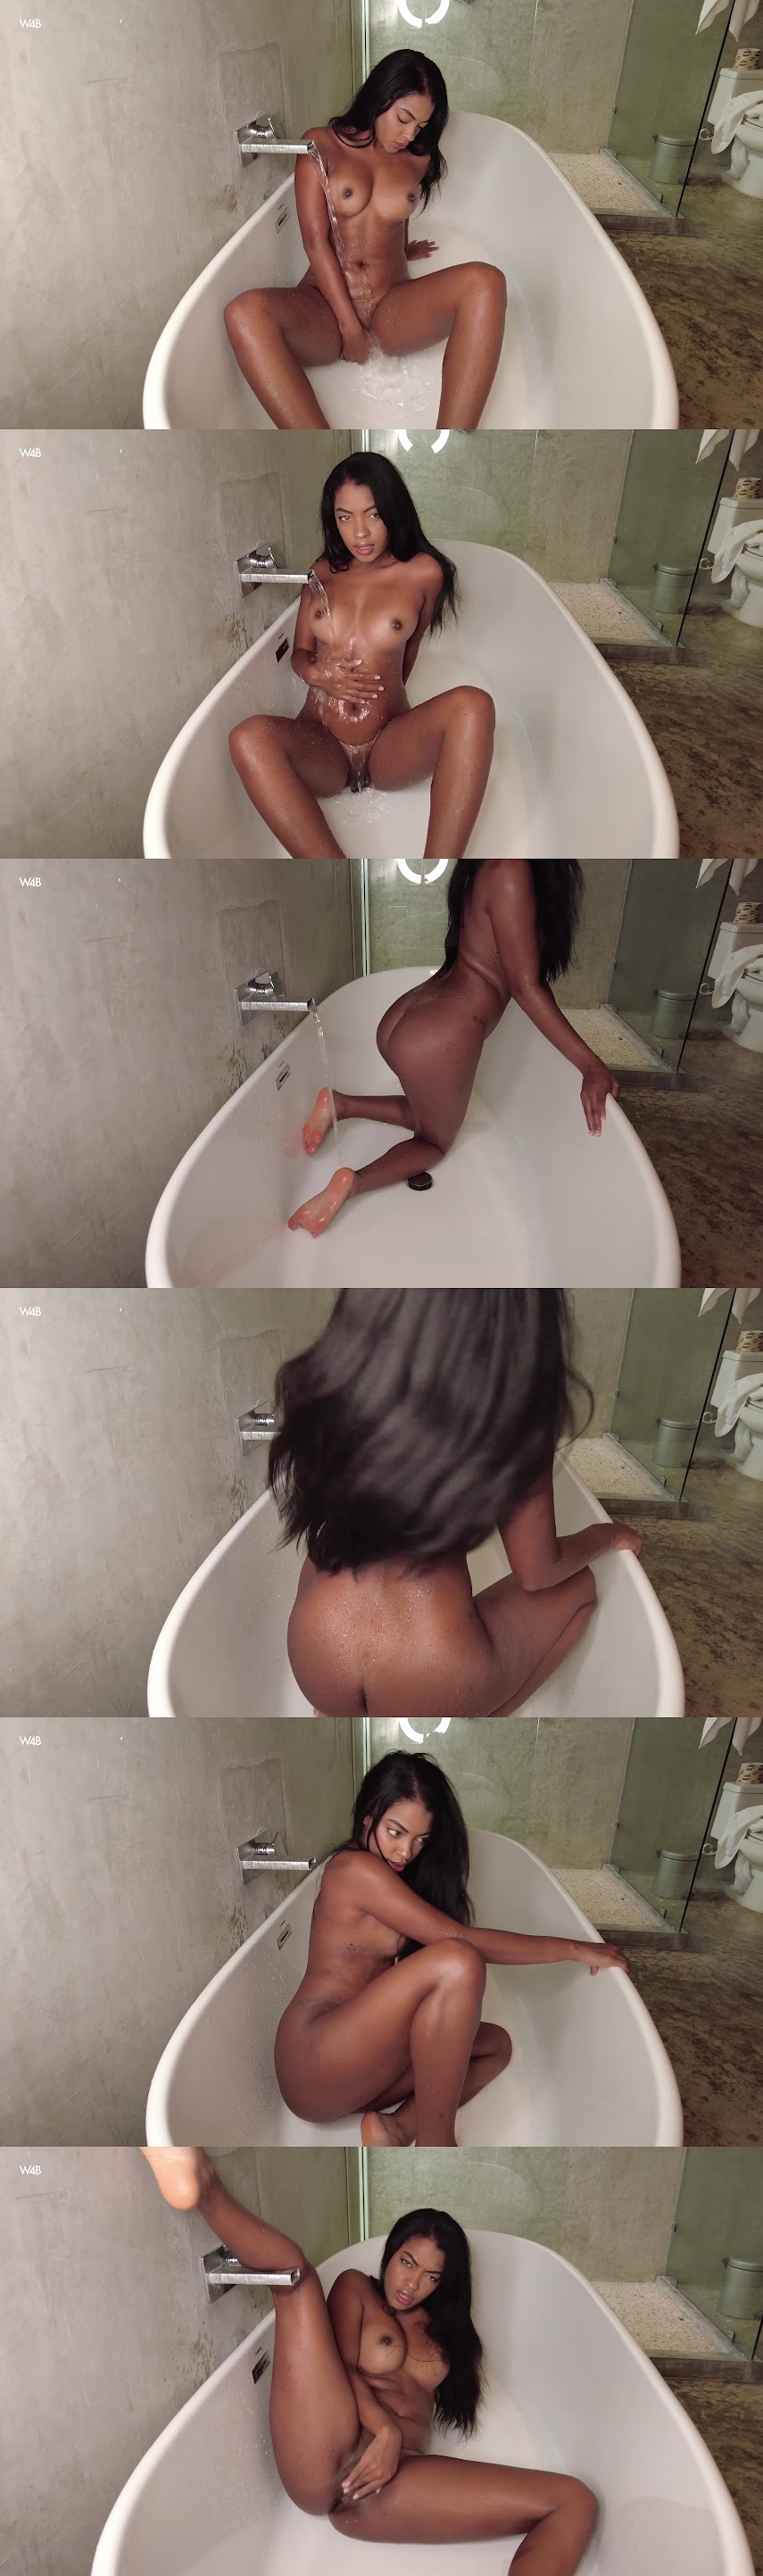 [WB4Y] Sofi Vega - Peeing In The Bathtub - idols